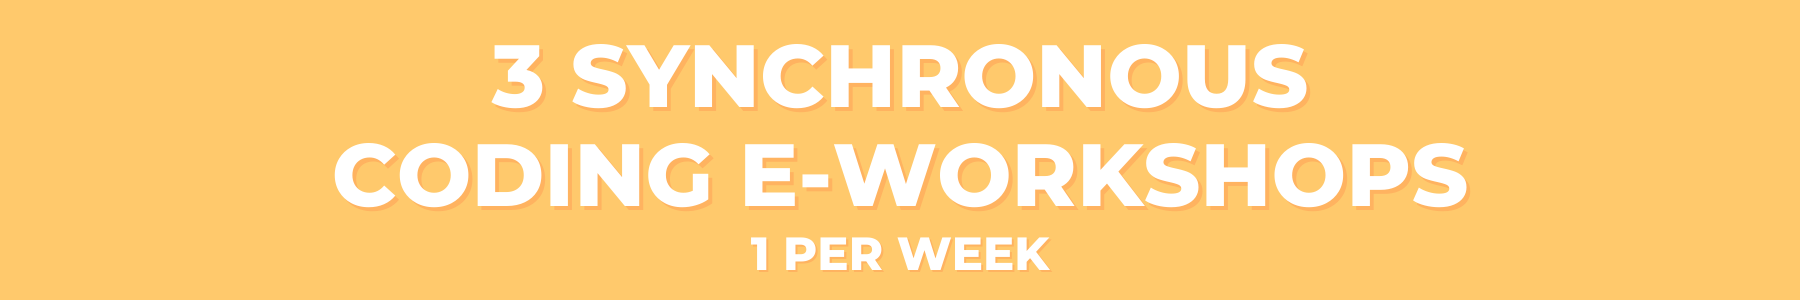 3 synchronous coding e-workshops 1 per week